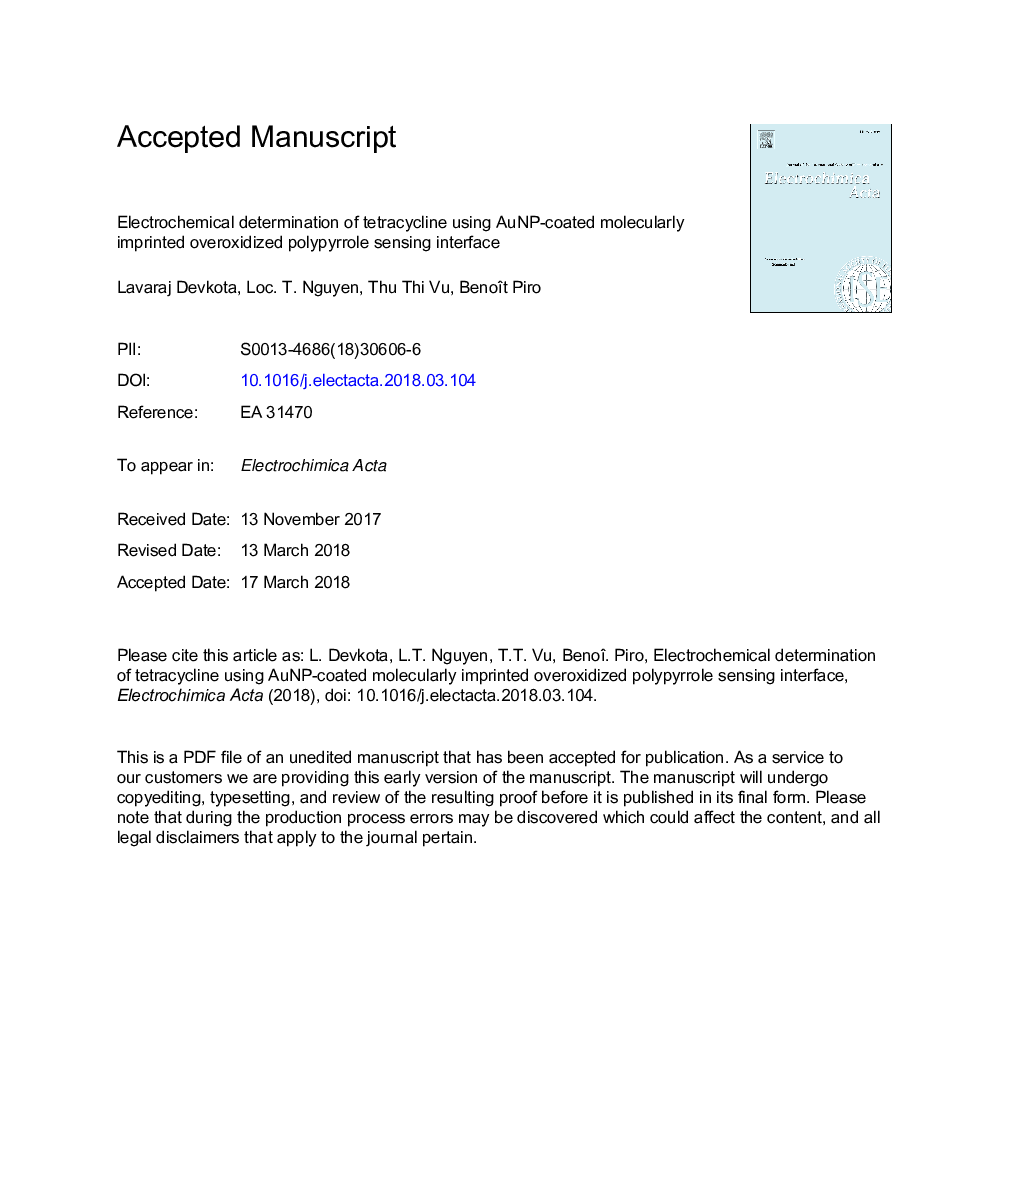 Electrochemical determination of tetracycline using AuNP-coated molecularly imprinted overoxidized polypyrrole sensing interface